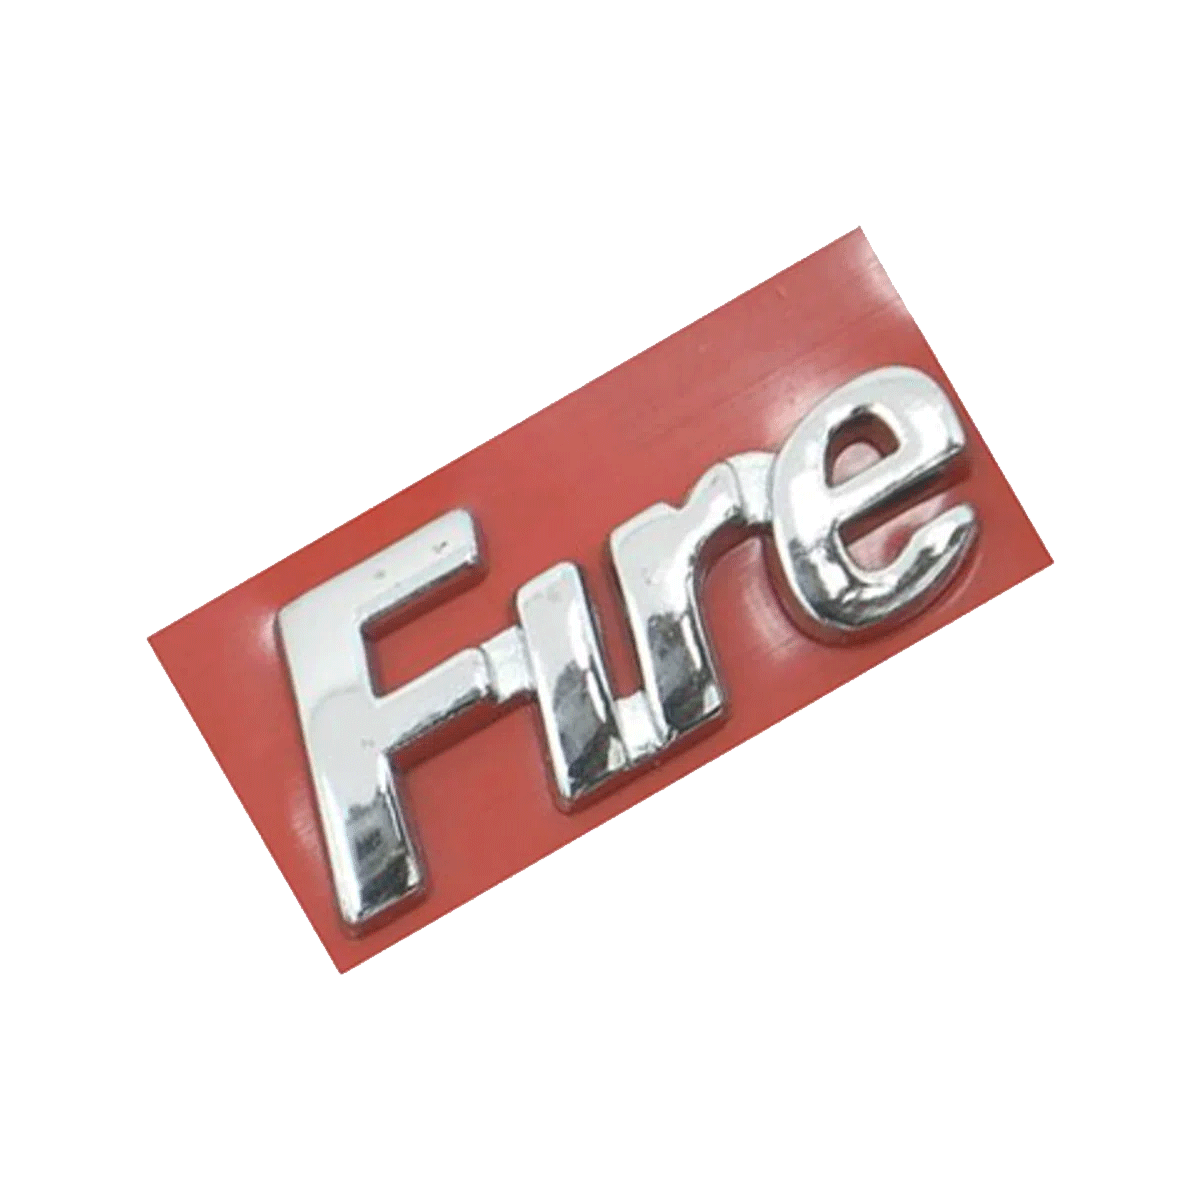 Emblema Fire 00/01 Cromado